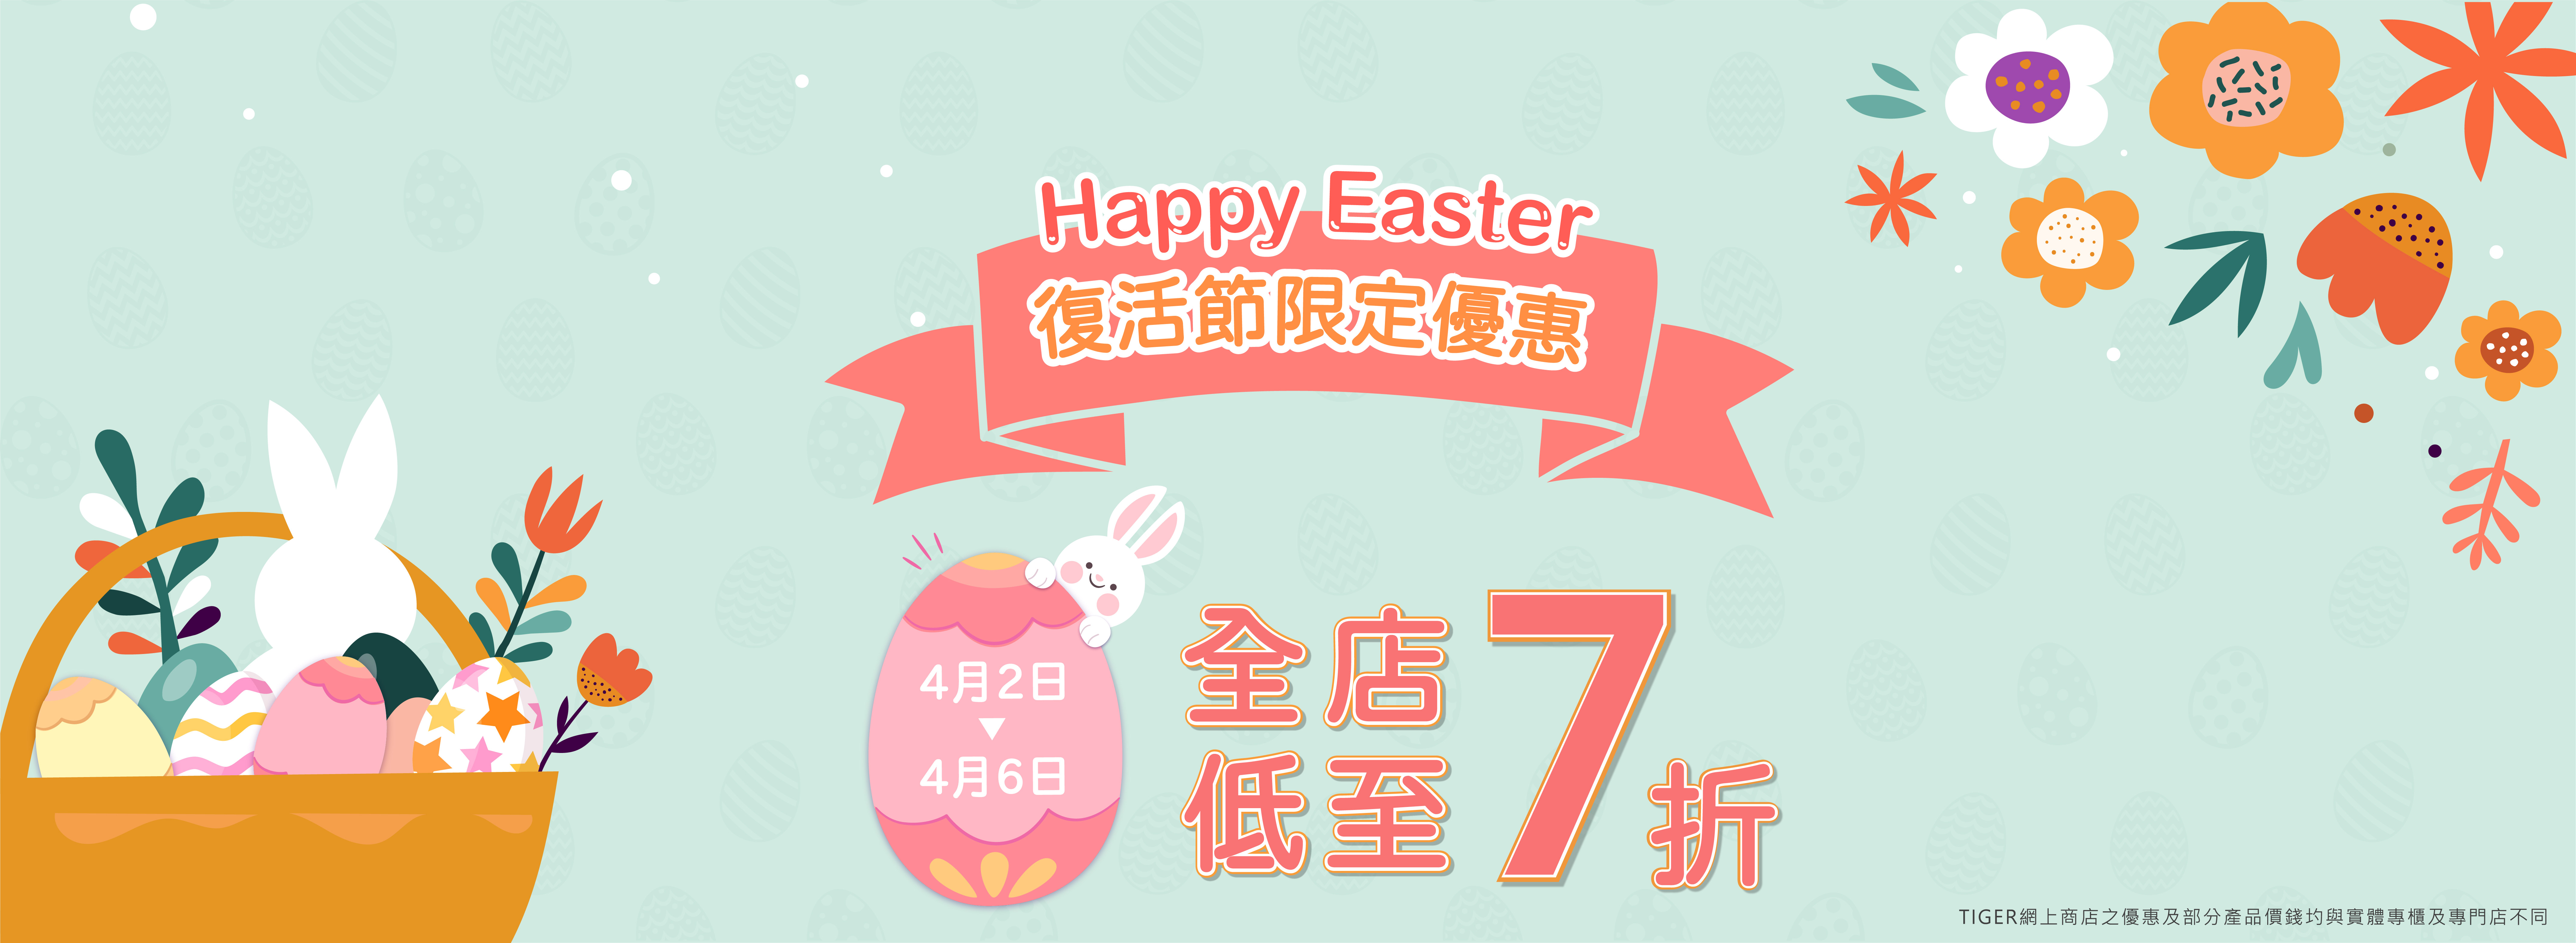 shopline-Easter-chi_main banner.jpg (1.54 MB)